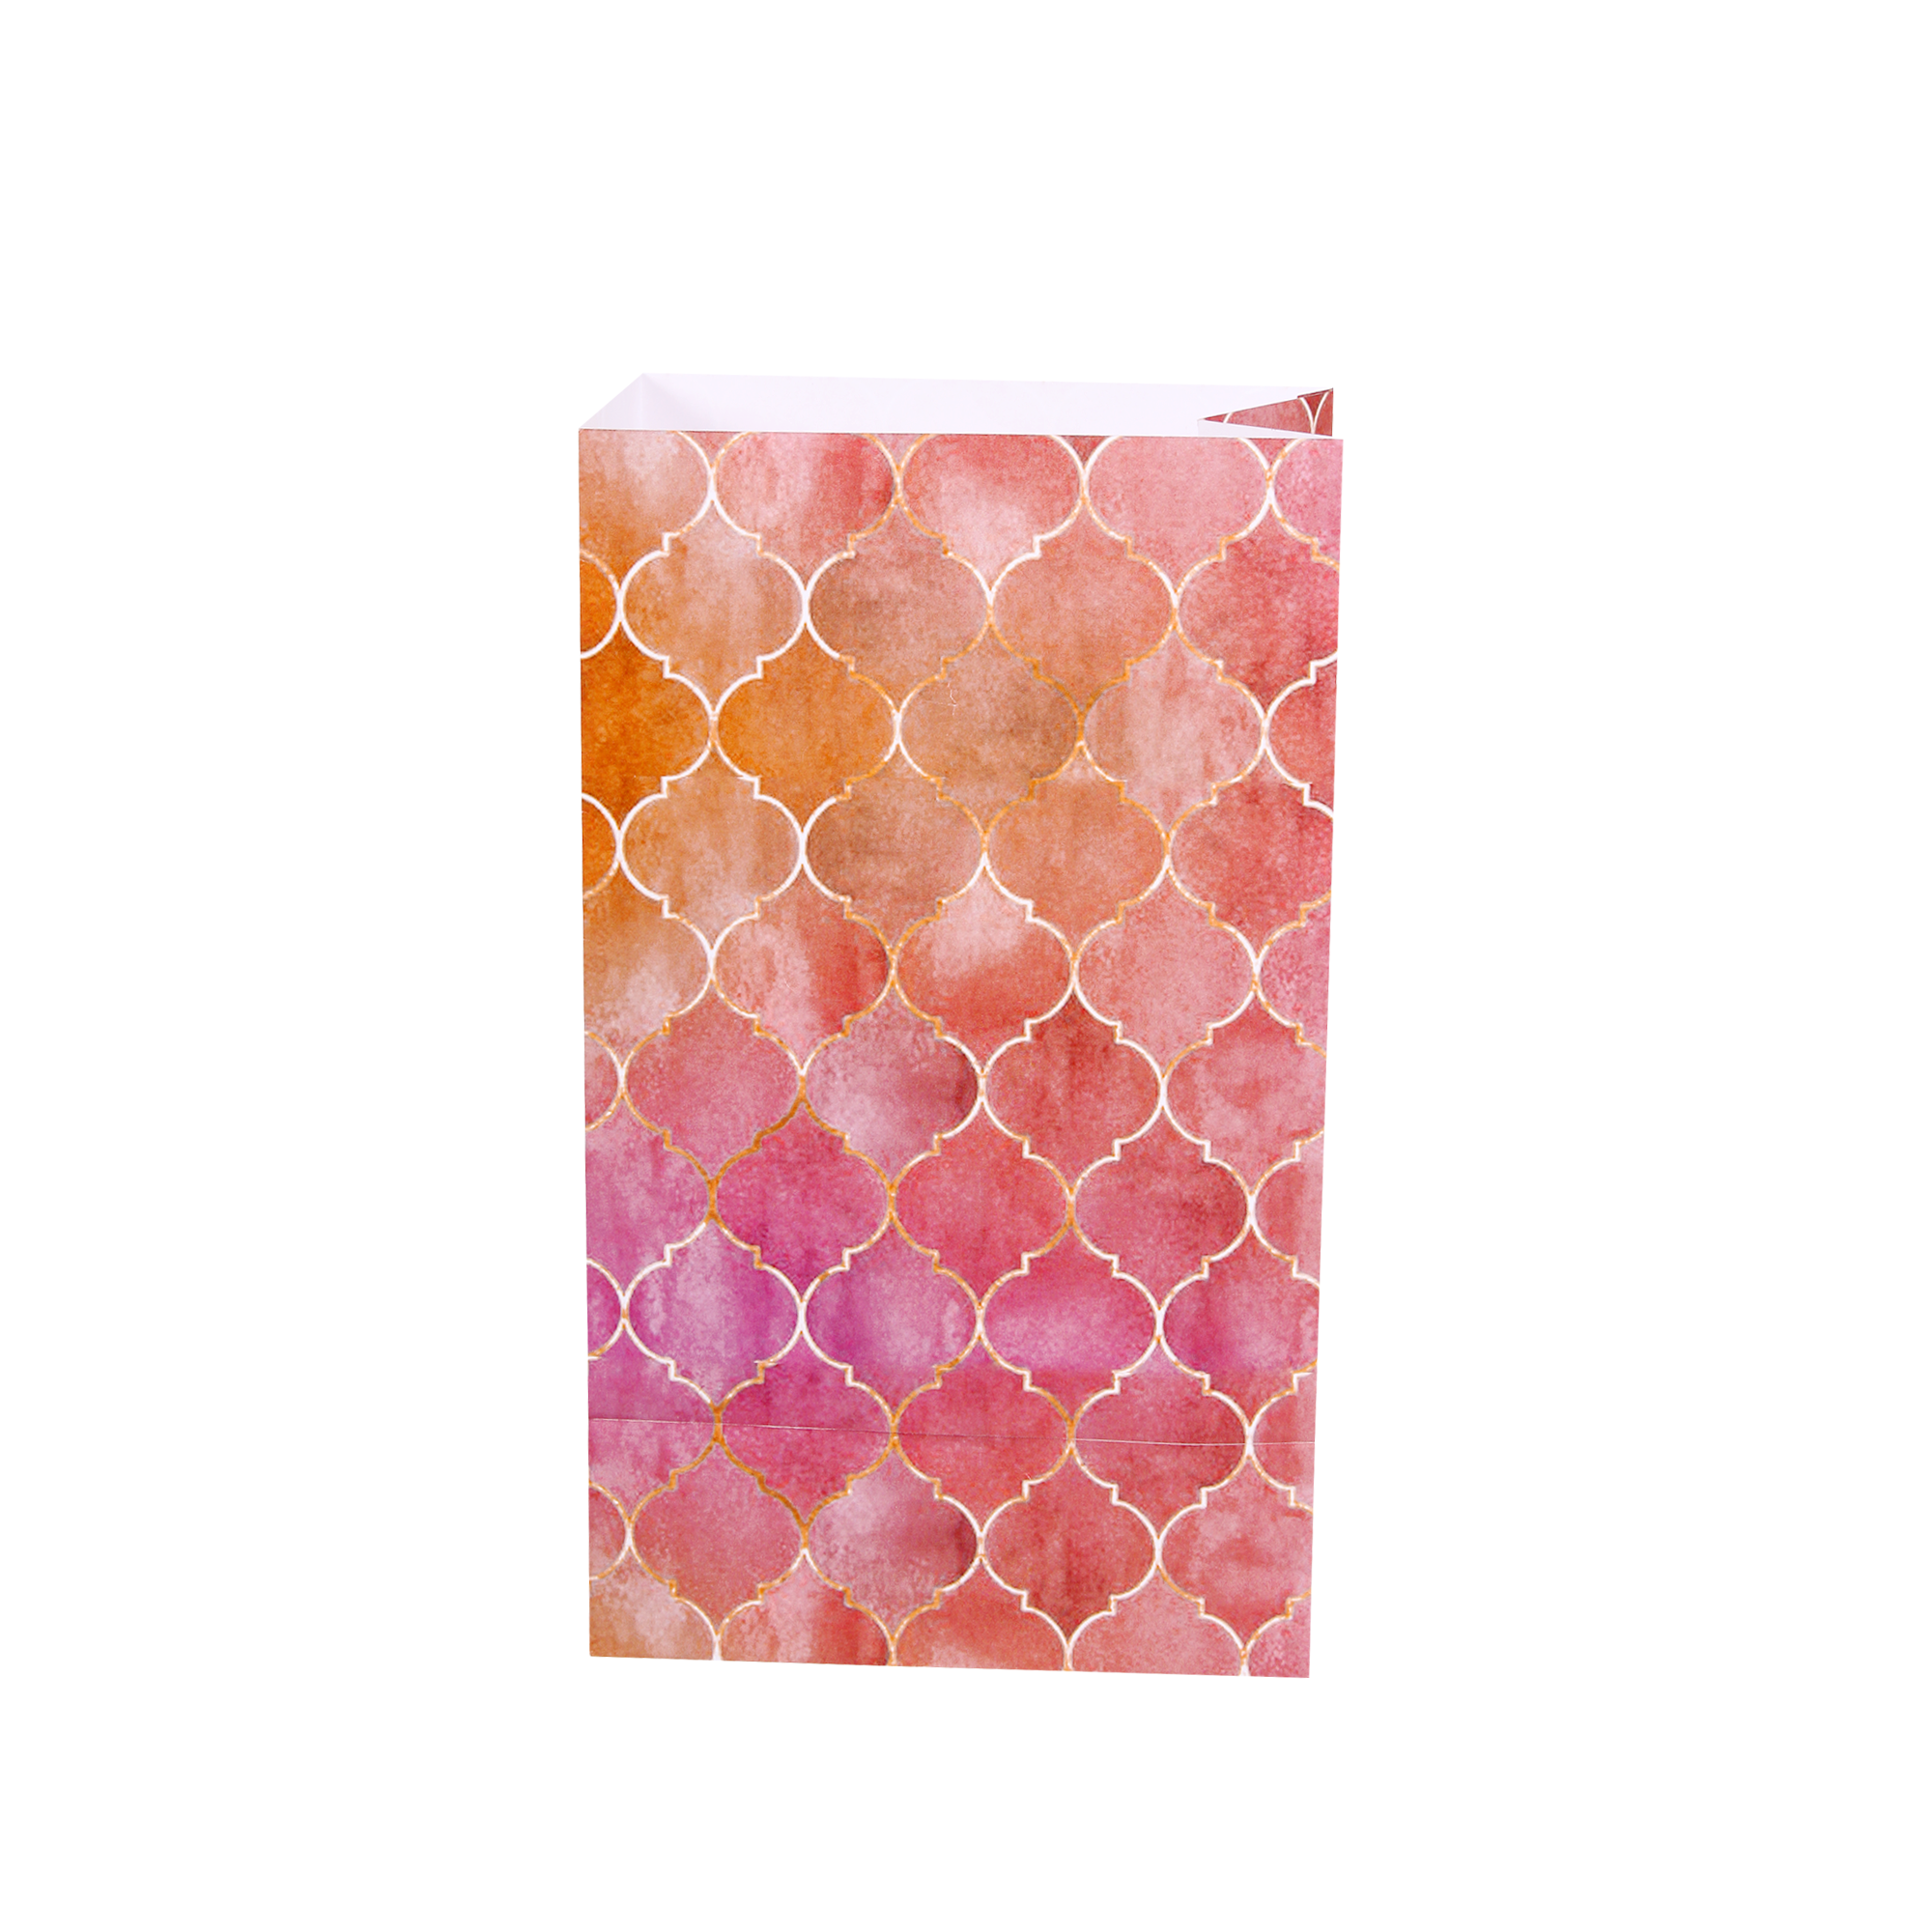 Gift Pouch Bag Morroccan Trellis Rosy Shimmer L 30.3 X W 16.2 X D 11.3Cm 6Pc Gol